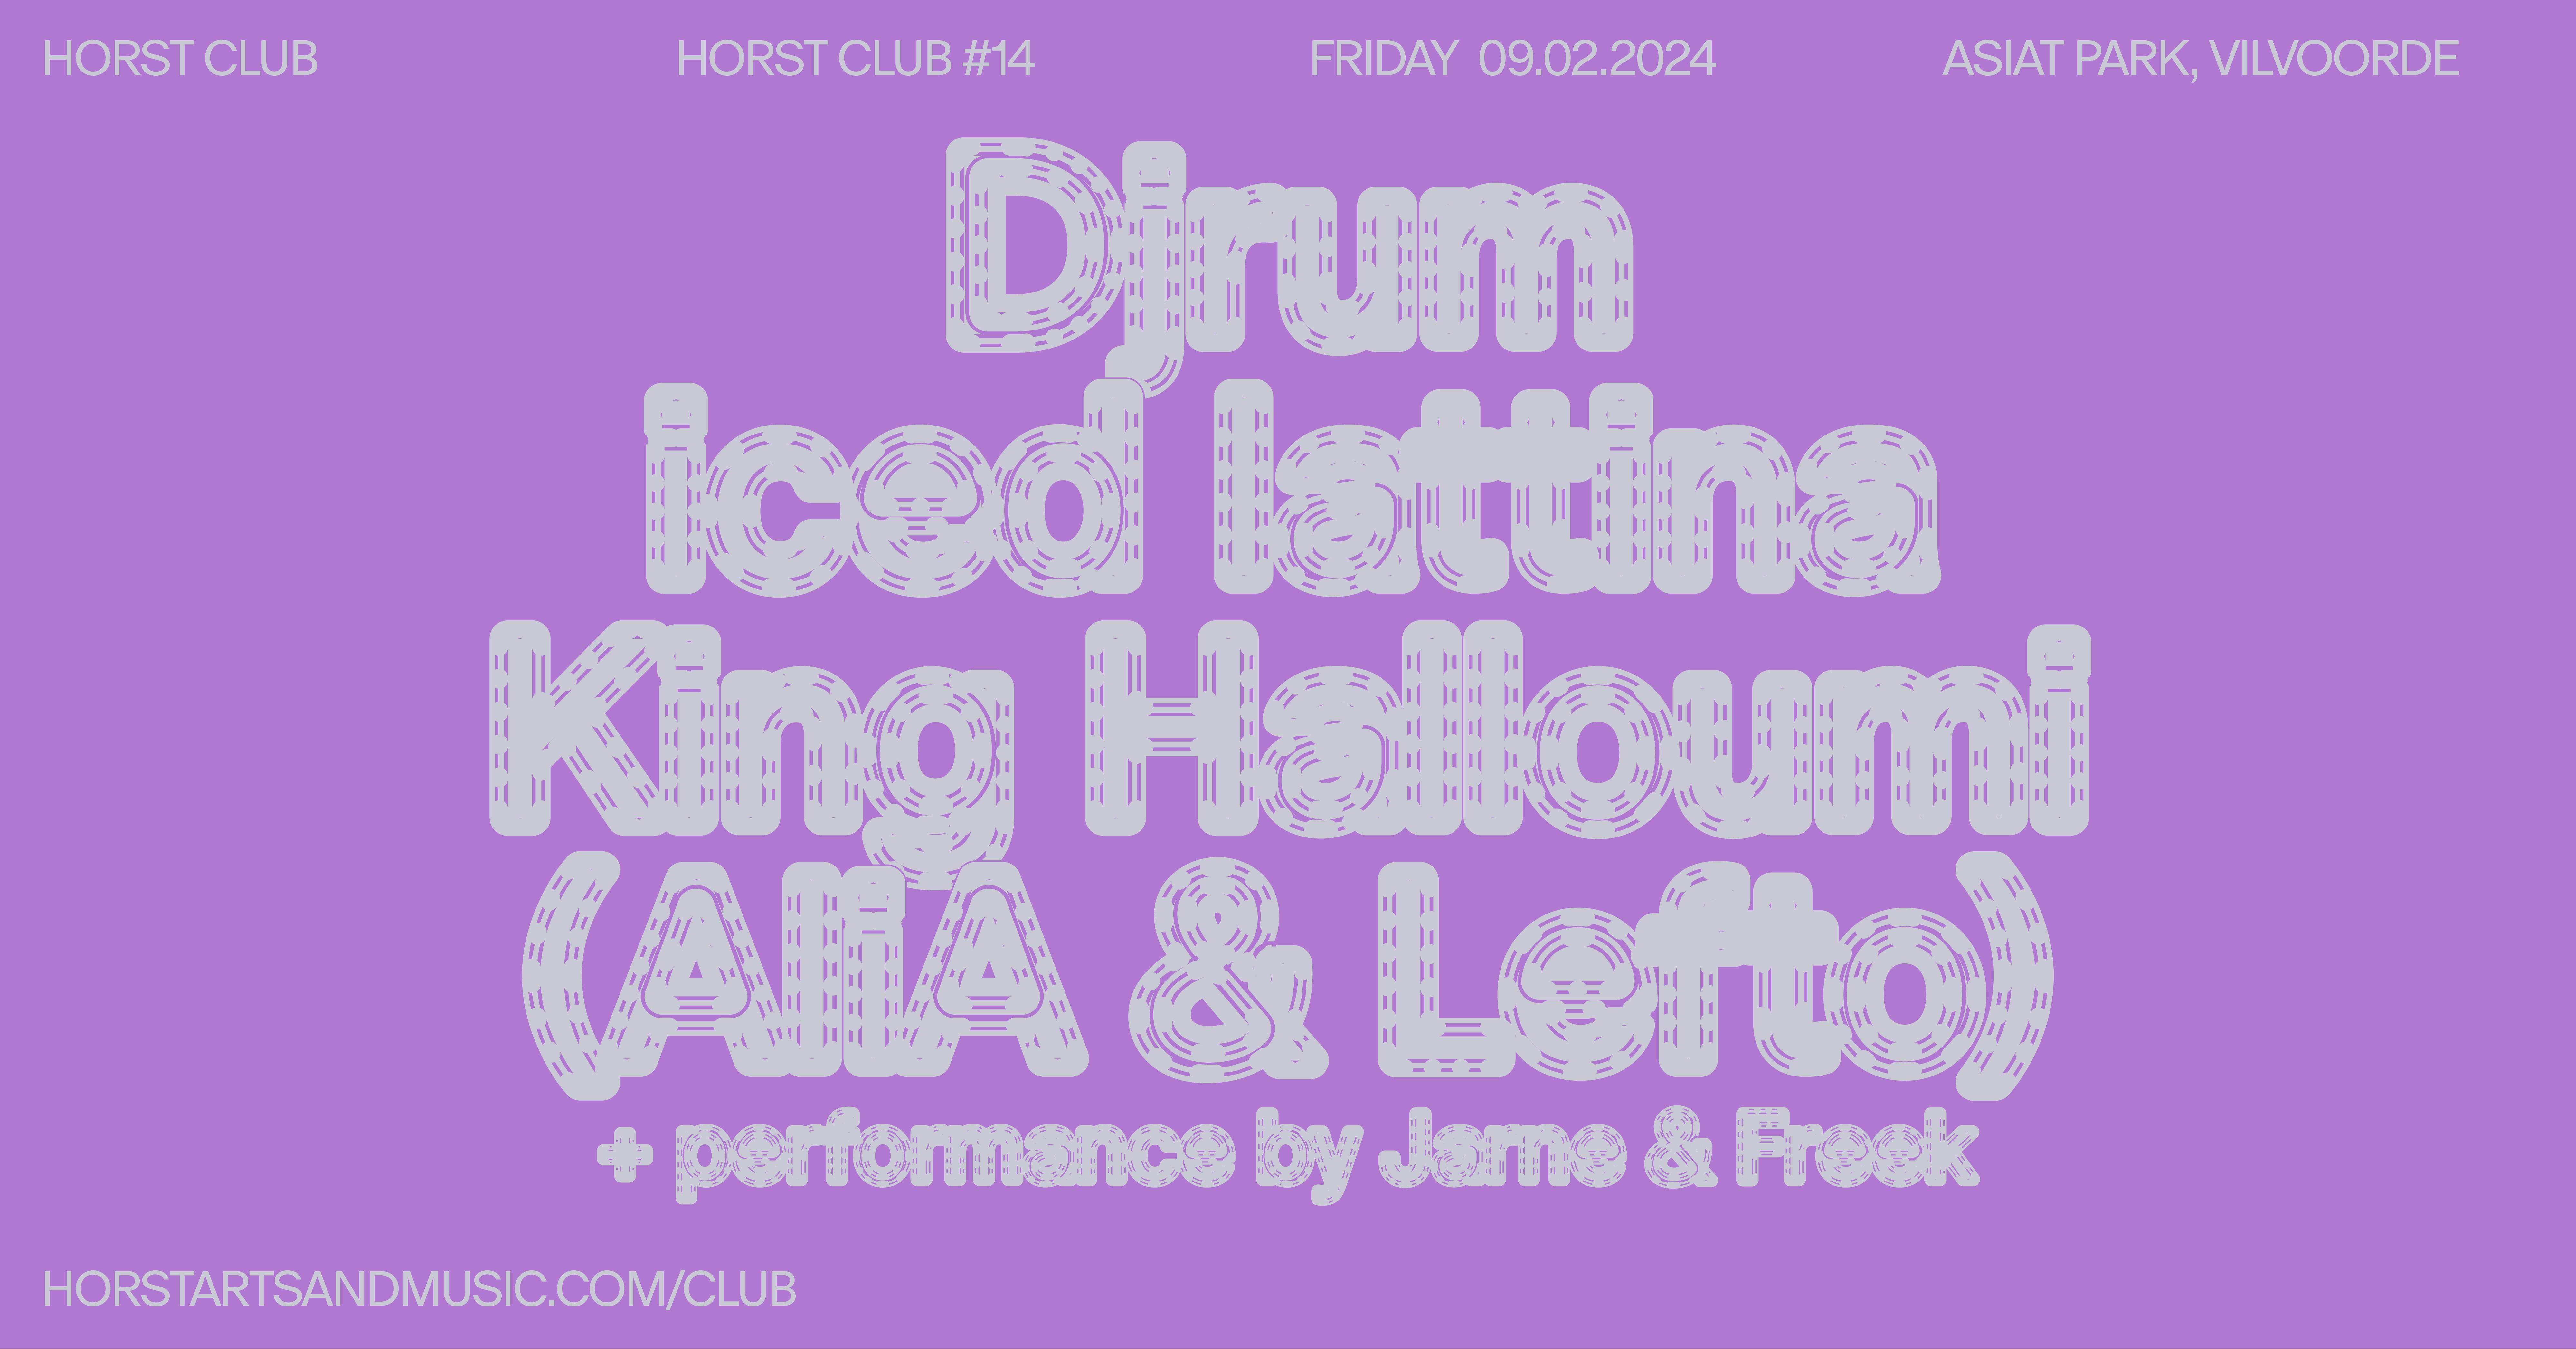 Horst Club #14 with DjRUM, King Halloumi (AliA & Lefto), iced lattina - Página frontal